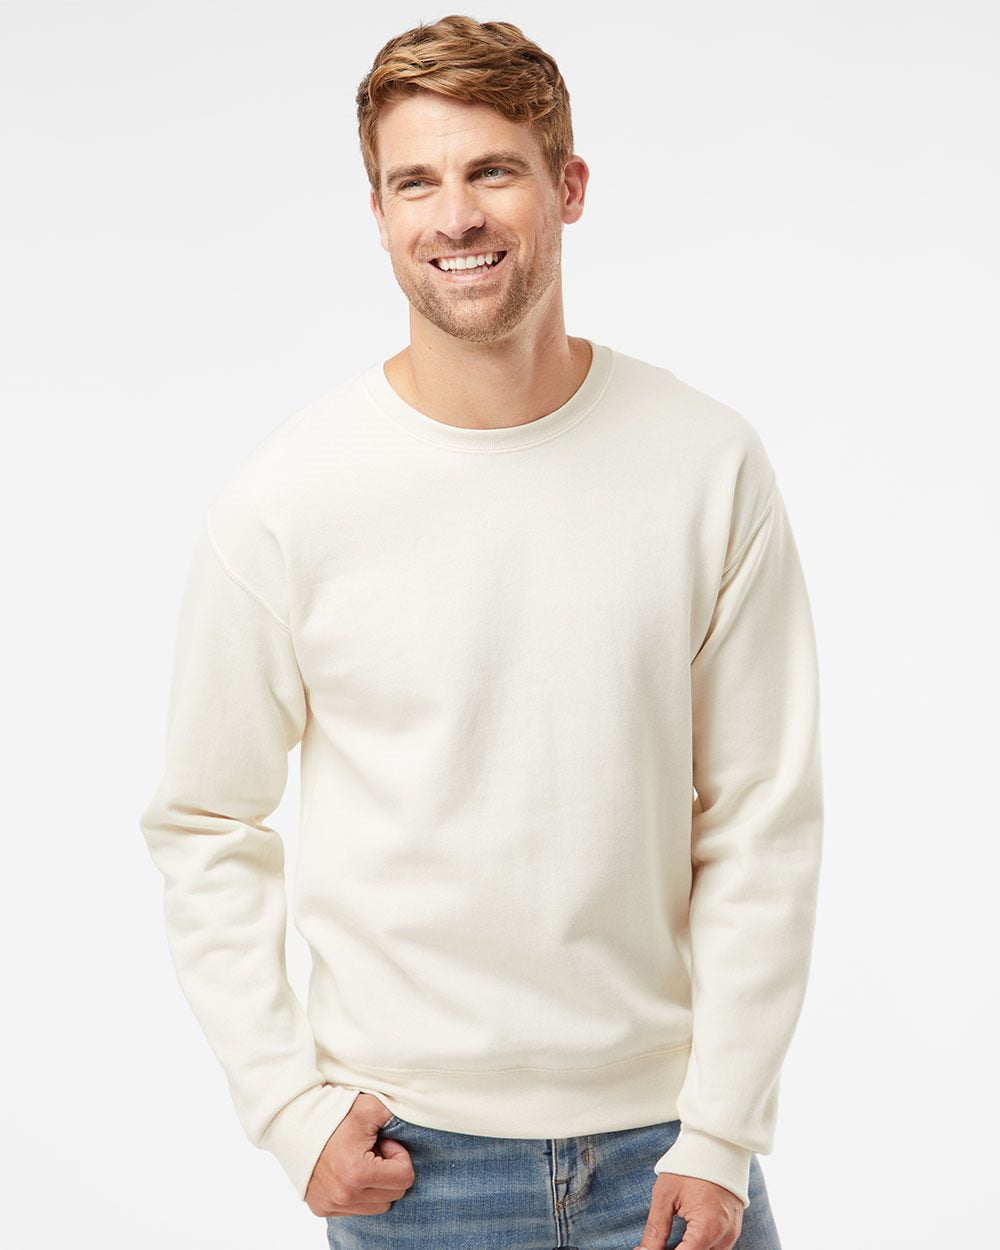 JERZEES - NuBlend Crewneck Sweatshirt - 562MR - Sandstone - Size: S 